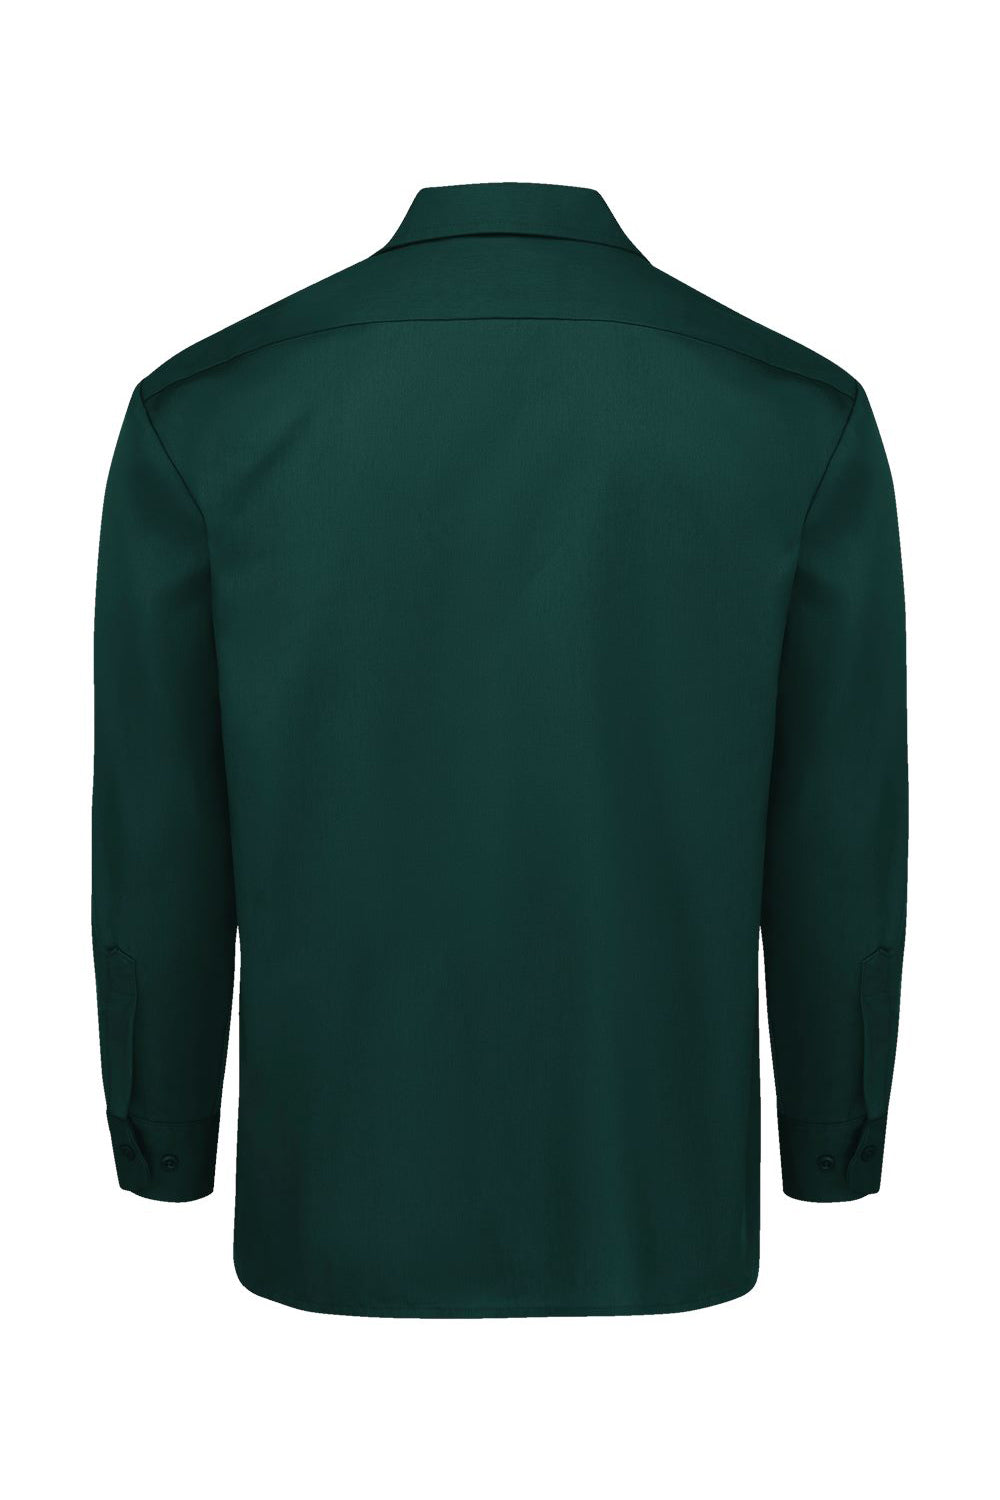 Dickies 5574 Mens Moisture Wicking Long Sleeve Button Down Work Shirt w/ Double Pockets Hunter Green Flat Back